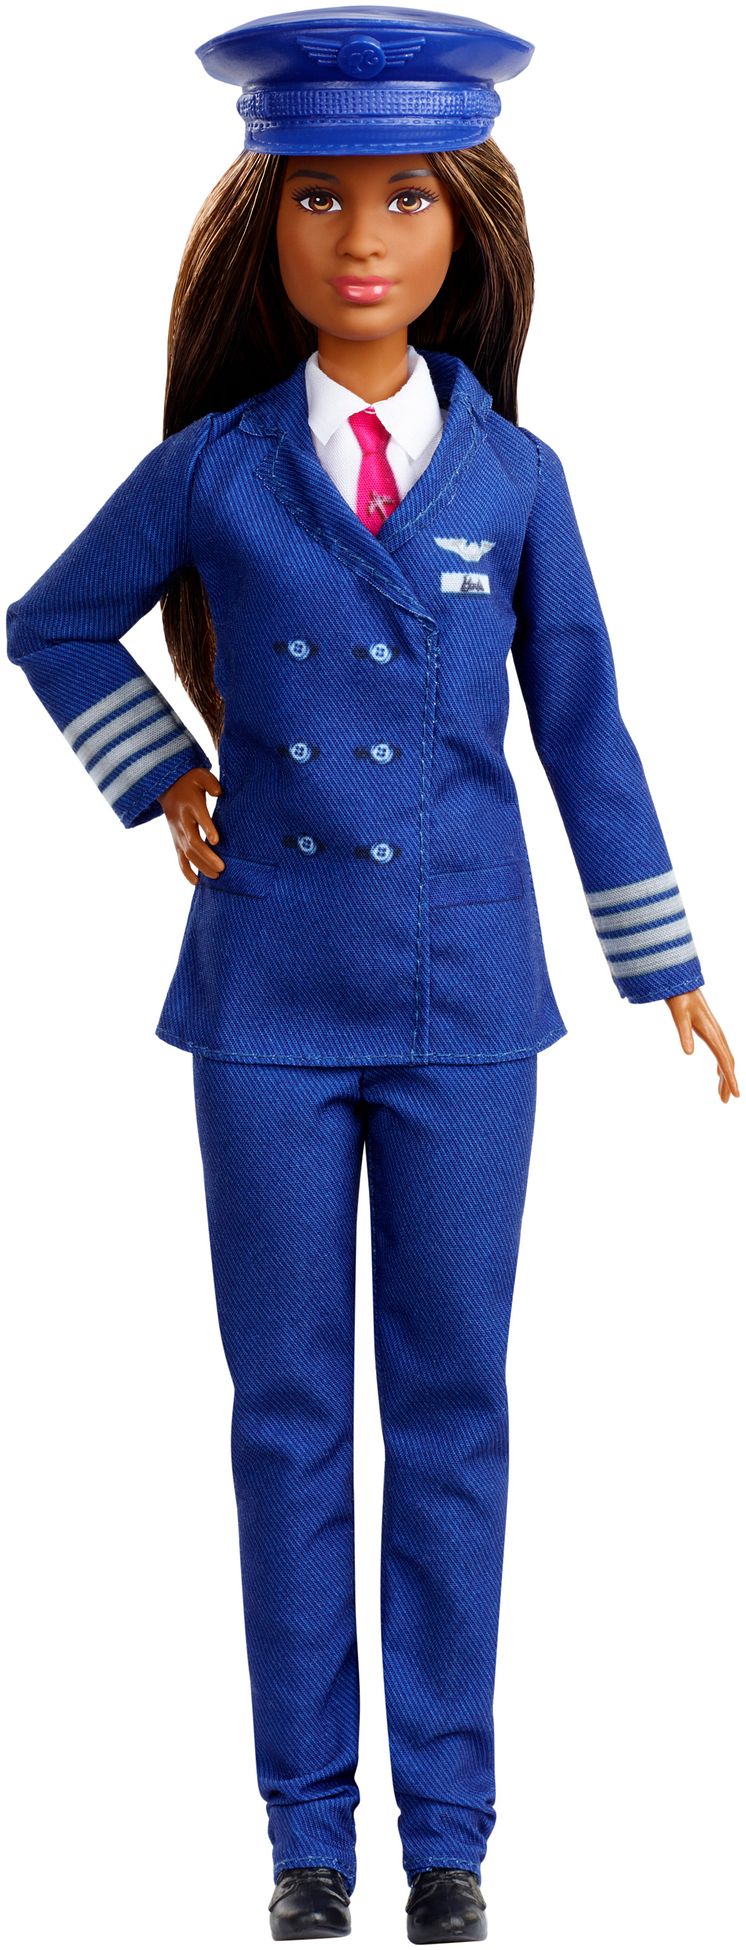 Barbie 60. Jubiläum karriere-Puppe Pilotin